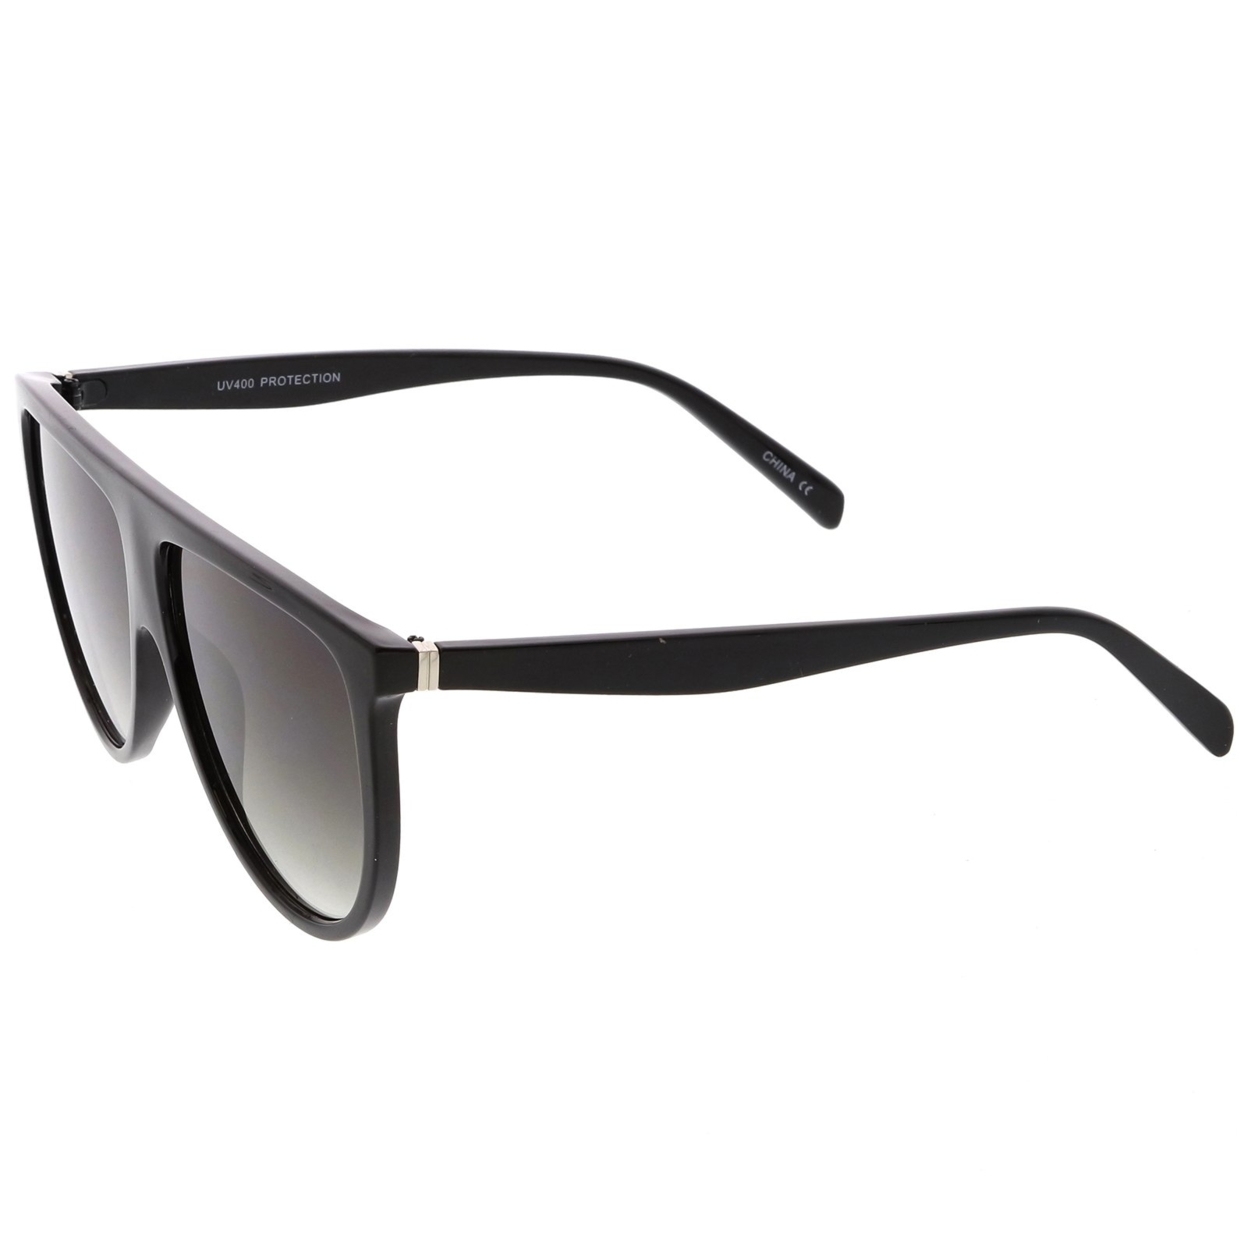 Modern Oversize Flat Top Aviator Sunglasses With Neutral Color Flat Lens 59mm - Tortoise Blue / Lavender